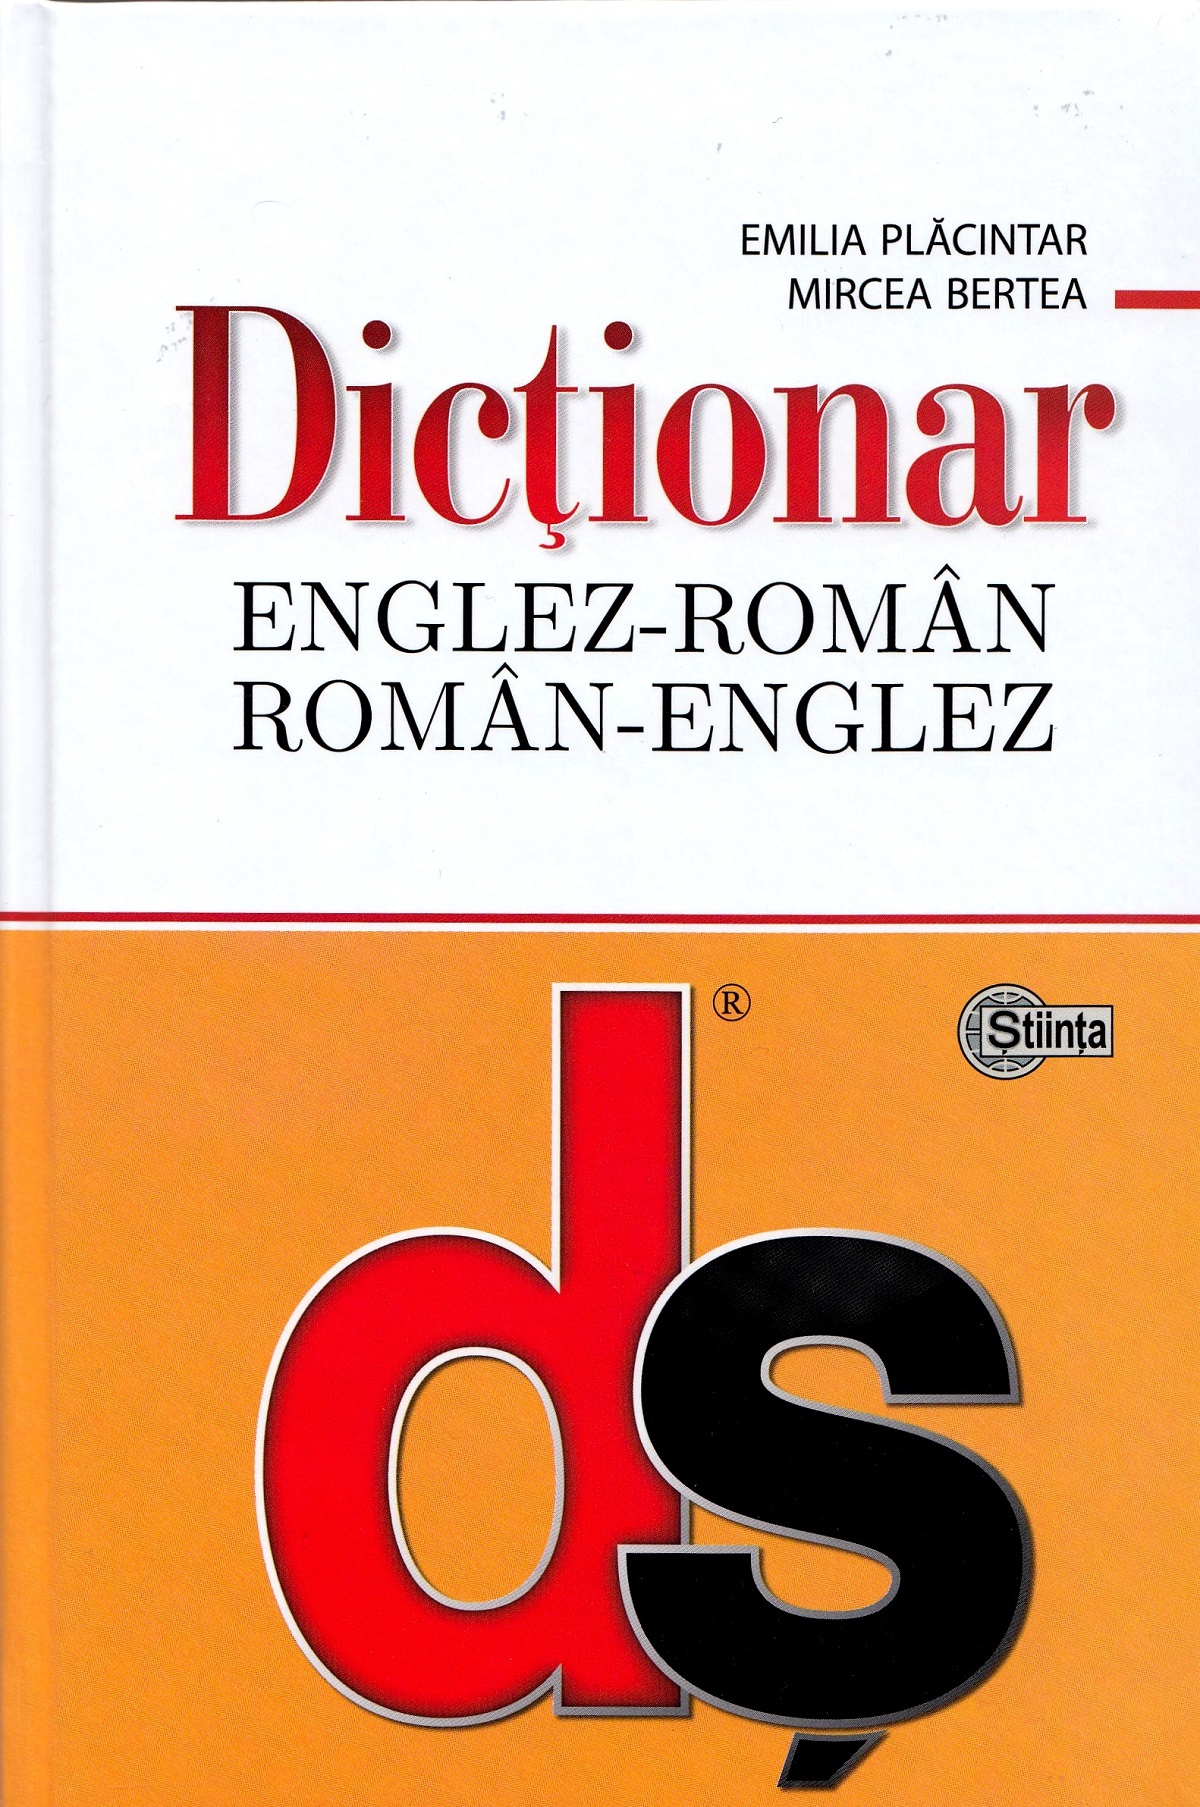 Dictionar englez-roman, roman-englez - Emilia Placintar, Mircea Bertea